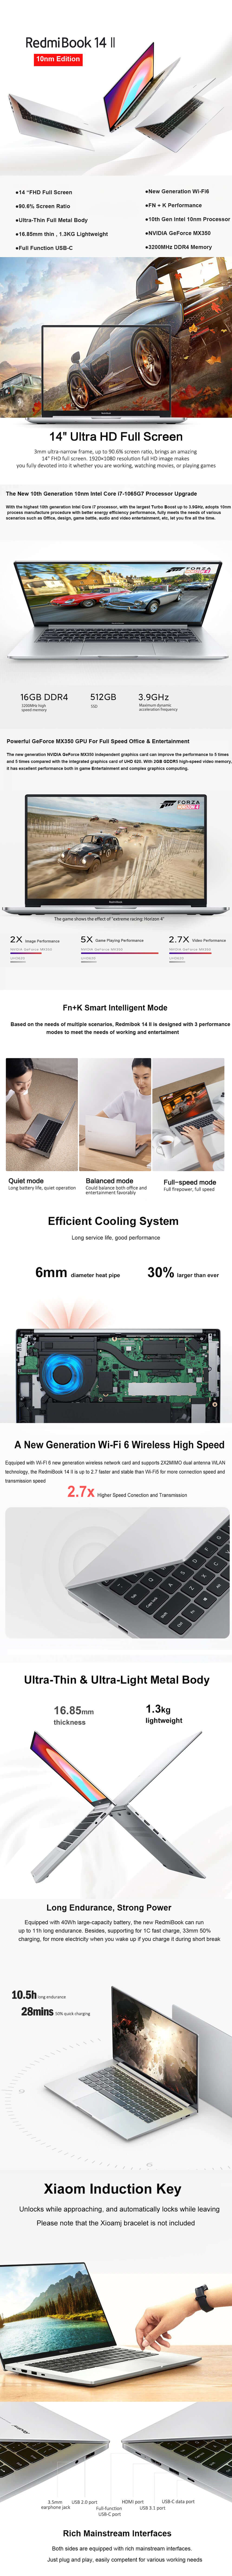 Xiaomi RedmiBook 14 Laptop II 14 inch Intel i7-1065G7 NVIDIA GeForce MX350 16G DDR4 512GB SSD 91% Ratio 100%sRGB WiFi 6 Full-featured Type-C Notebook 1